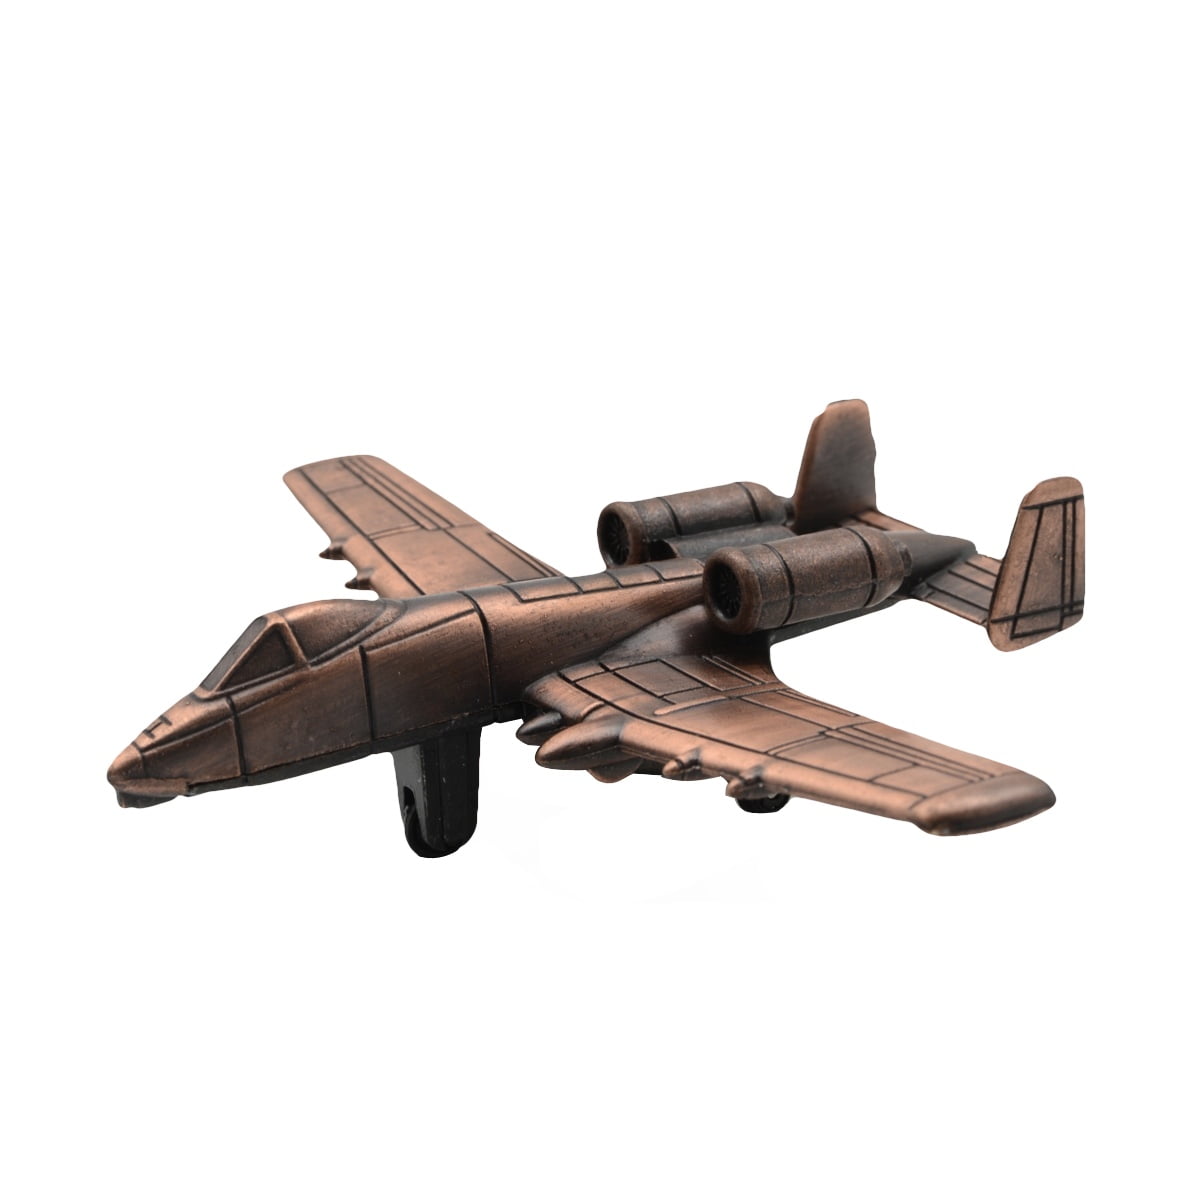 USAF Model A-10 Warthog Plane Die Cast Pencil Sharpener Air Force/Military Gift 